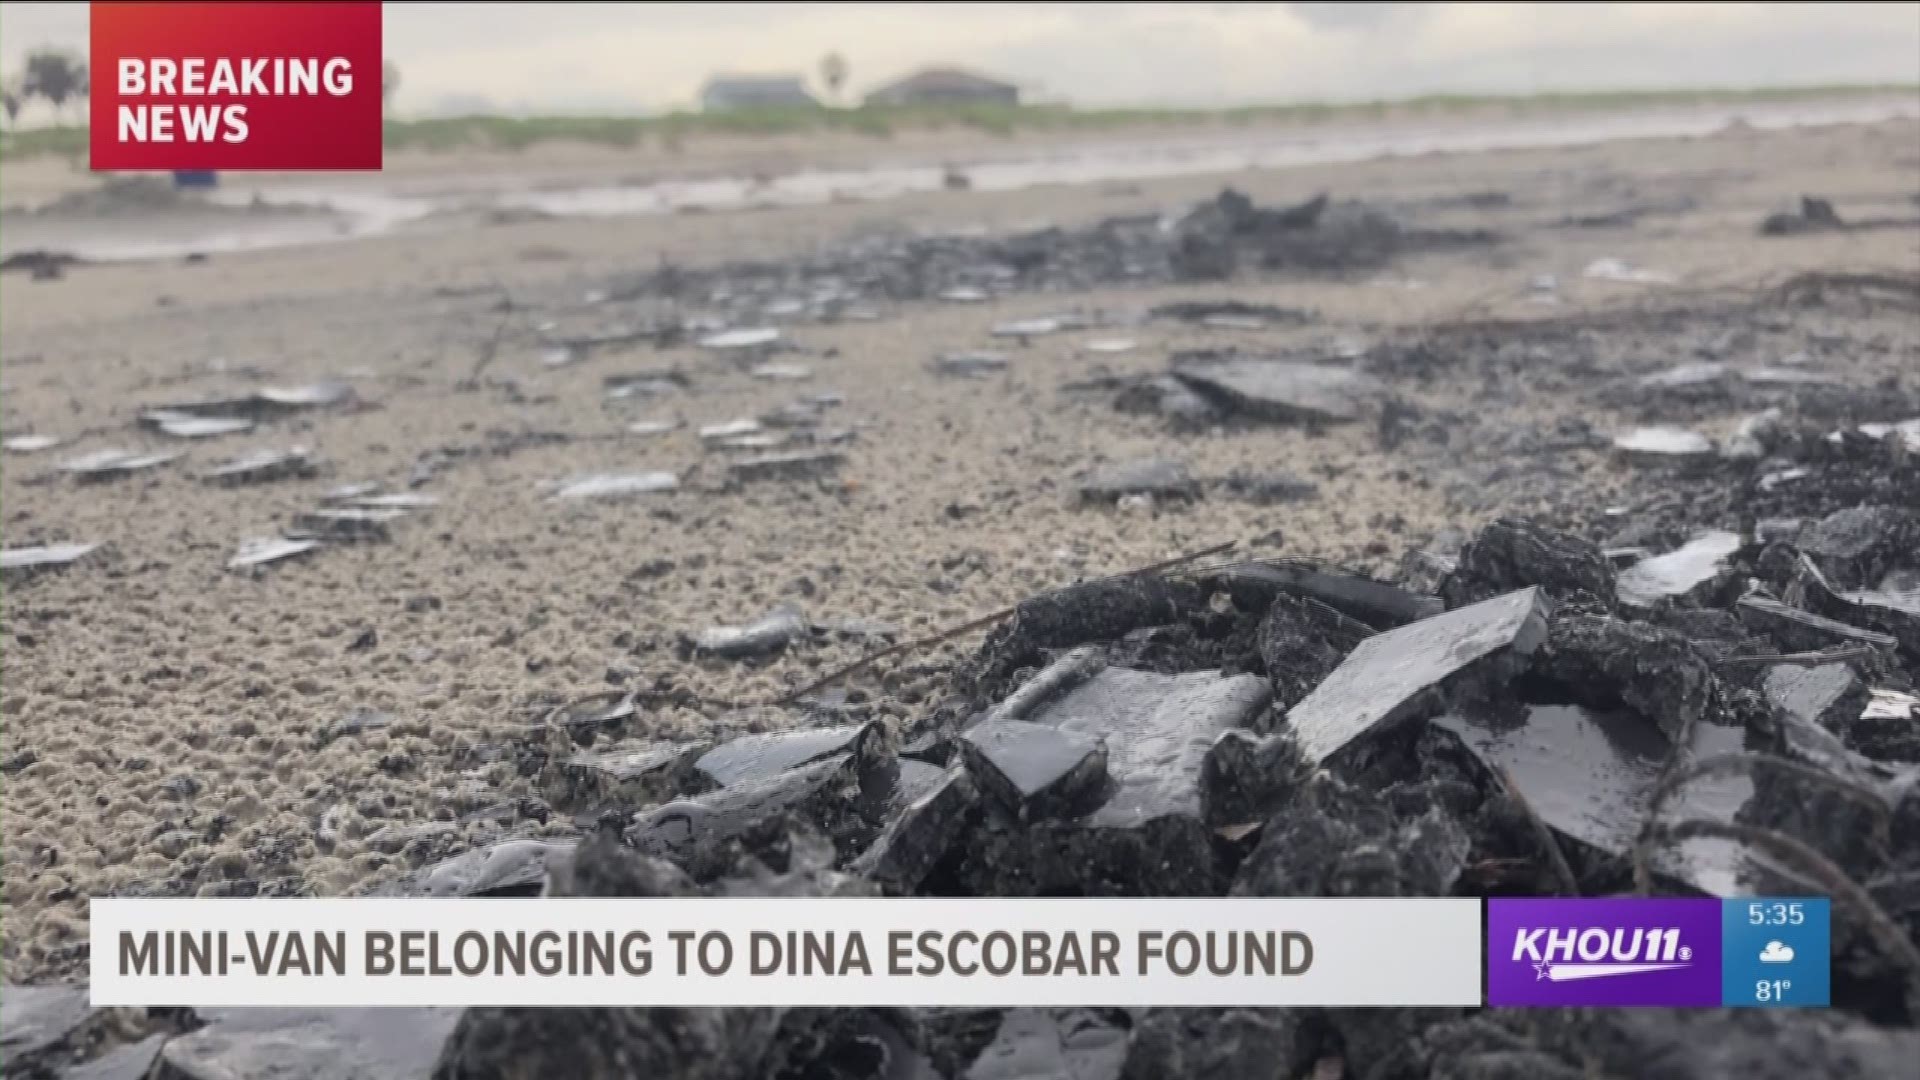 The mini-van belonging to Dina Escobar was found burned in Galveston.